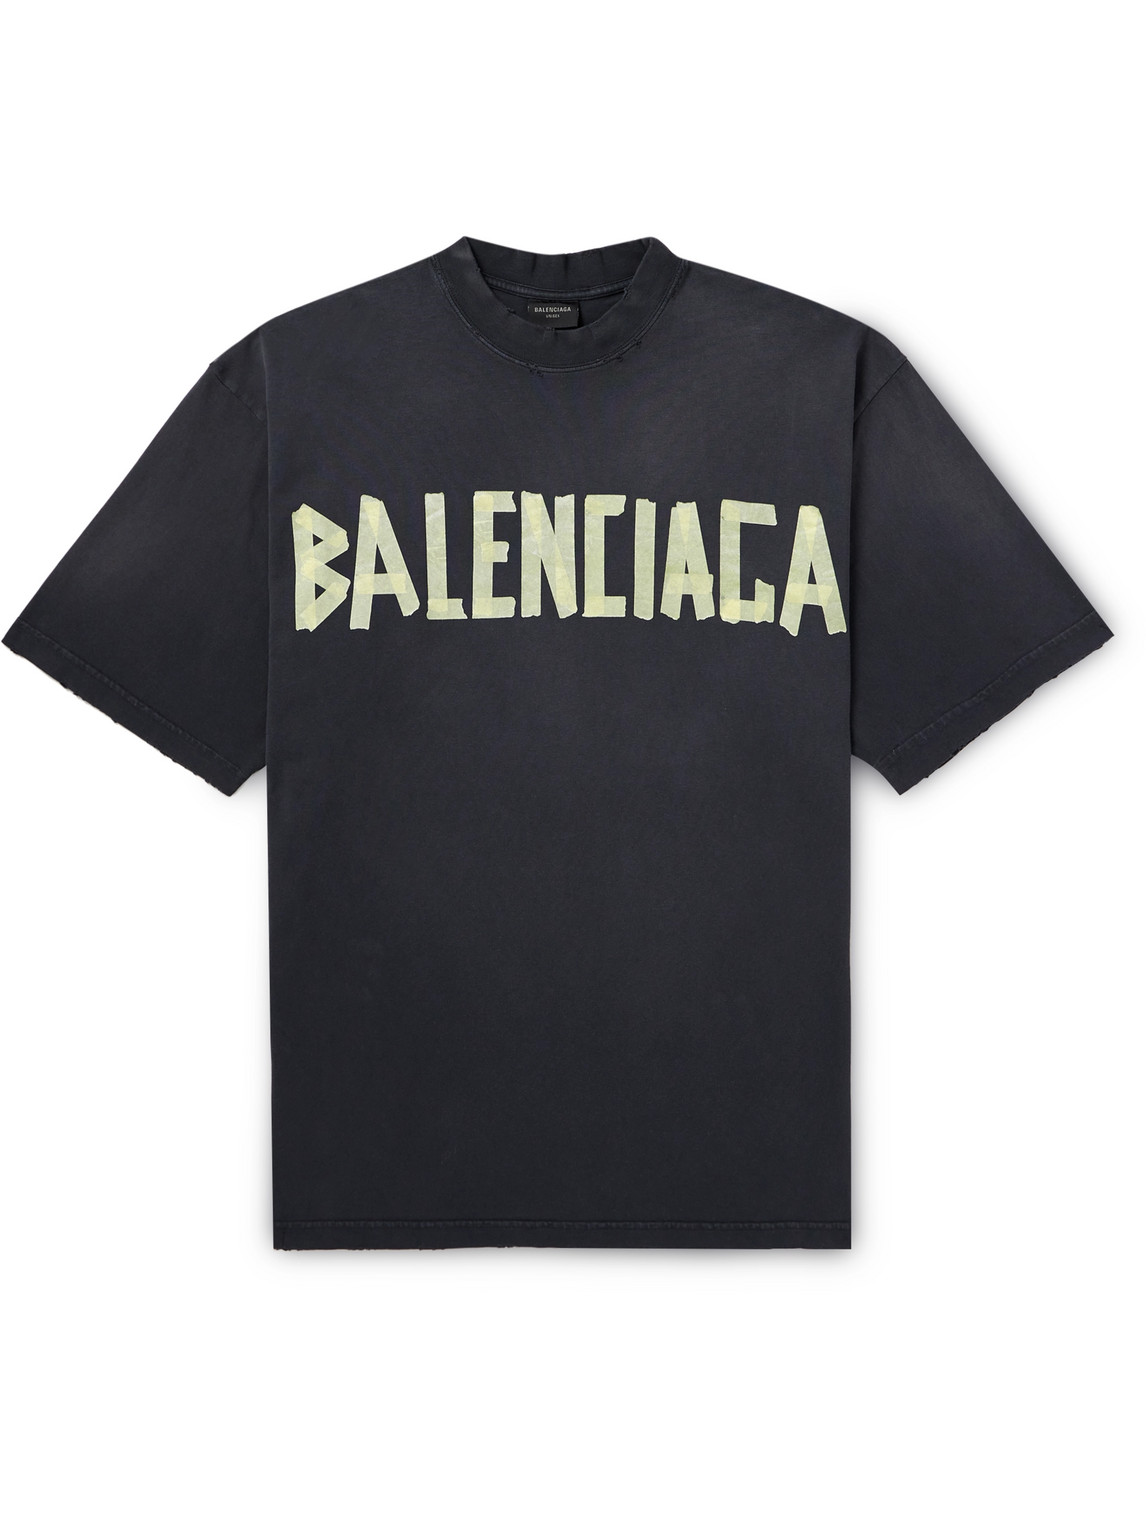 Balenciaga - Oversized Distressed Logo-Print Cotton-Jersey T-Shirt - Men - Black - L von Balenciaga